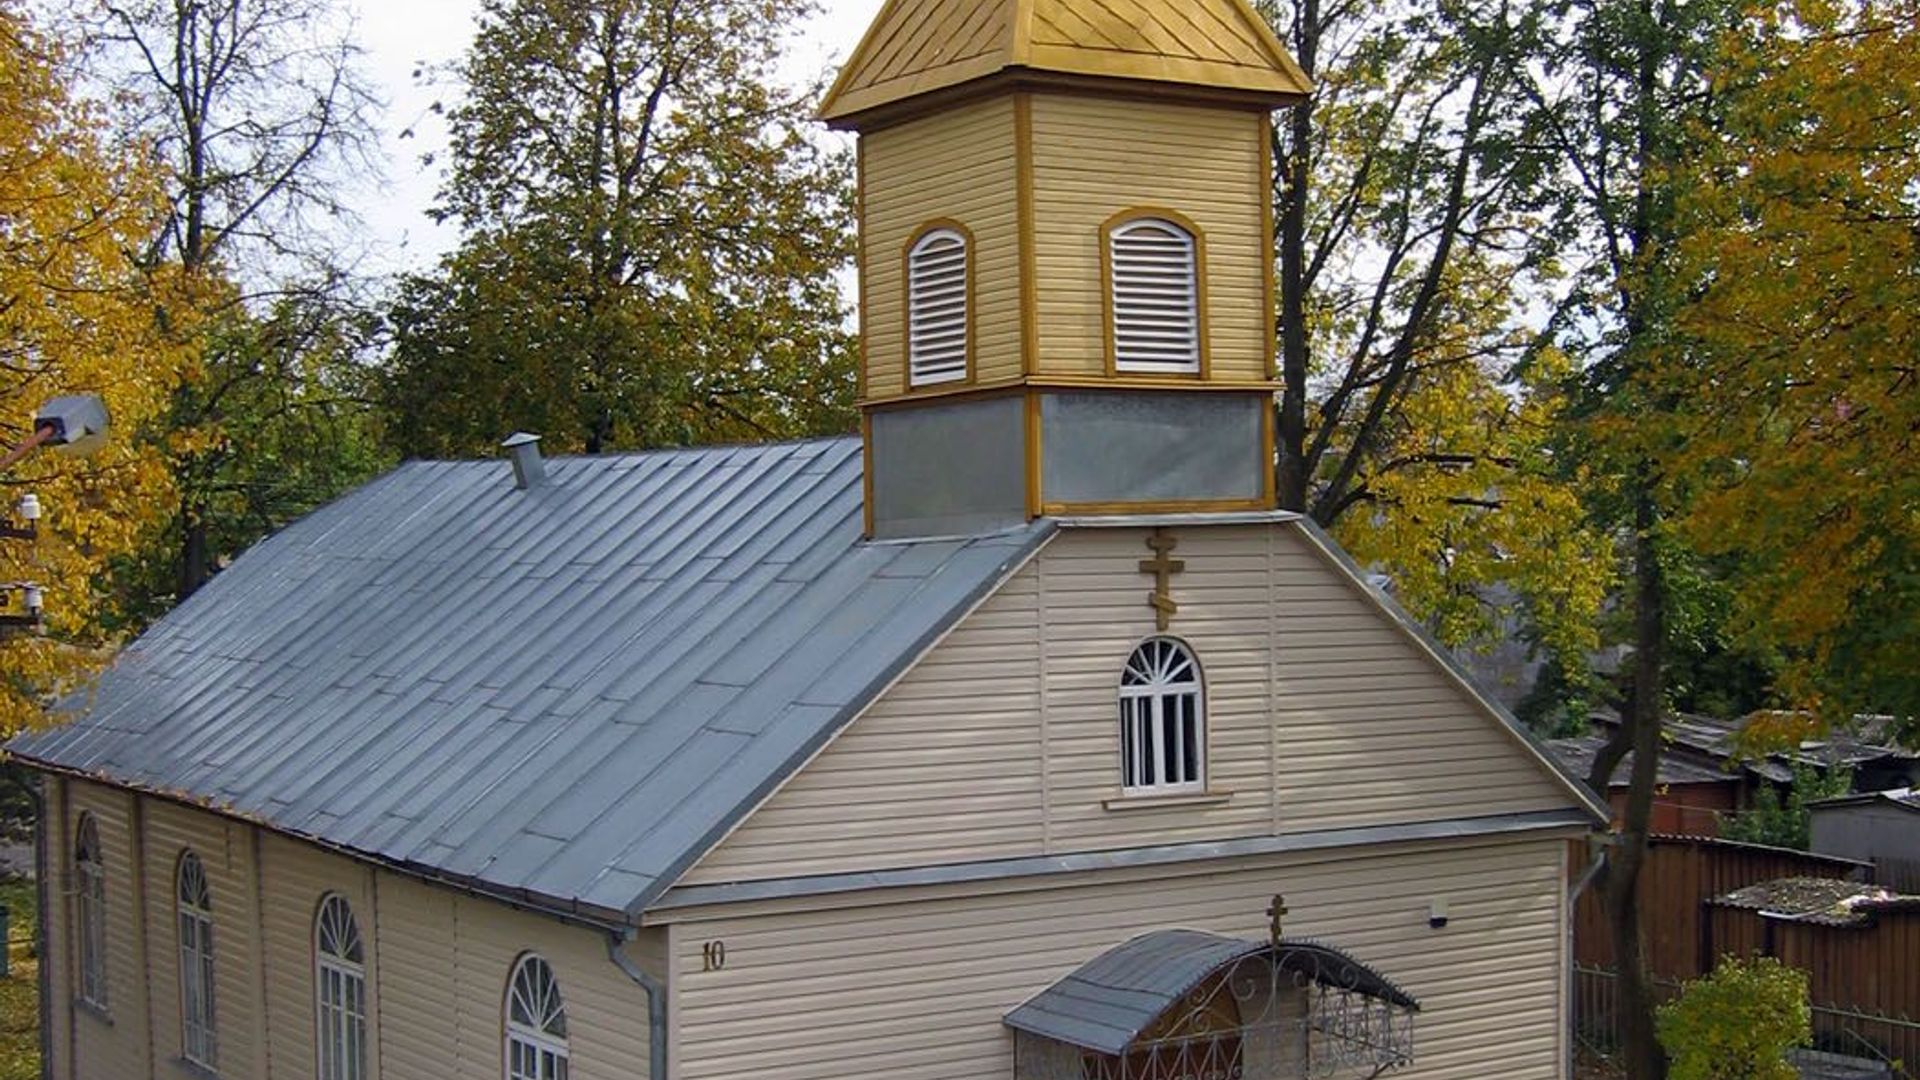 Panevėžys Old Believers Church